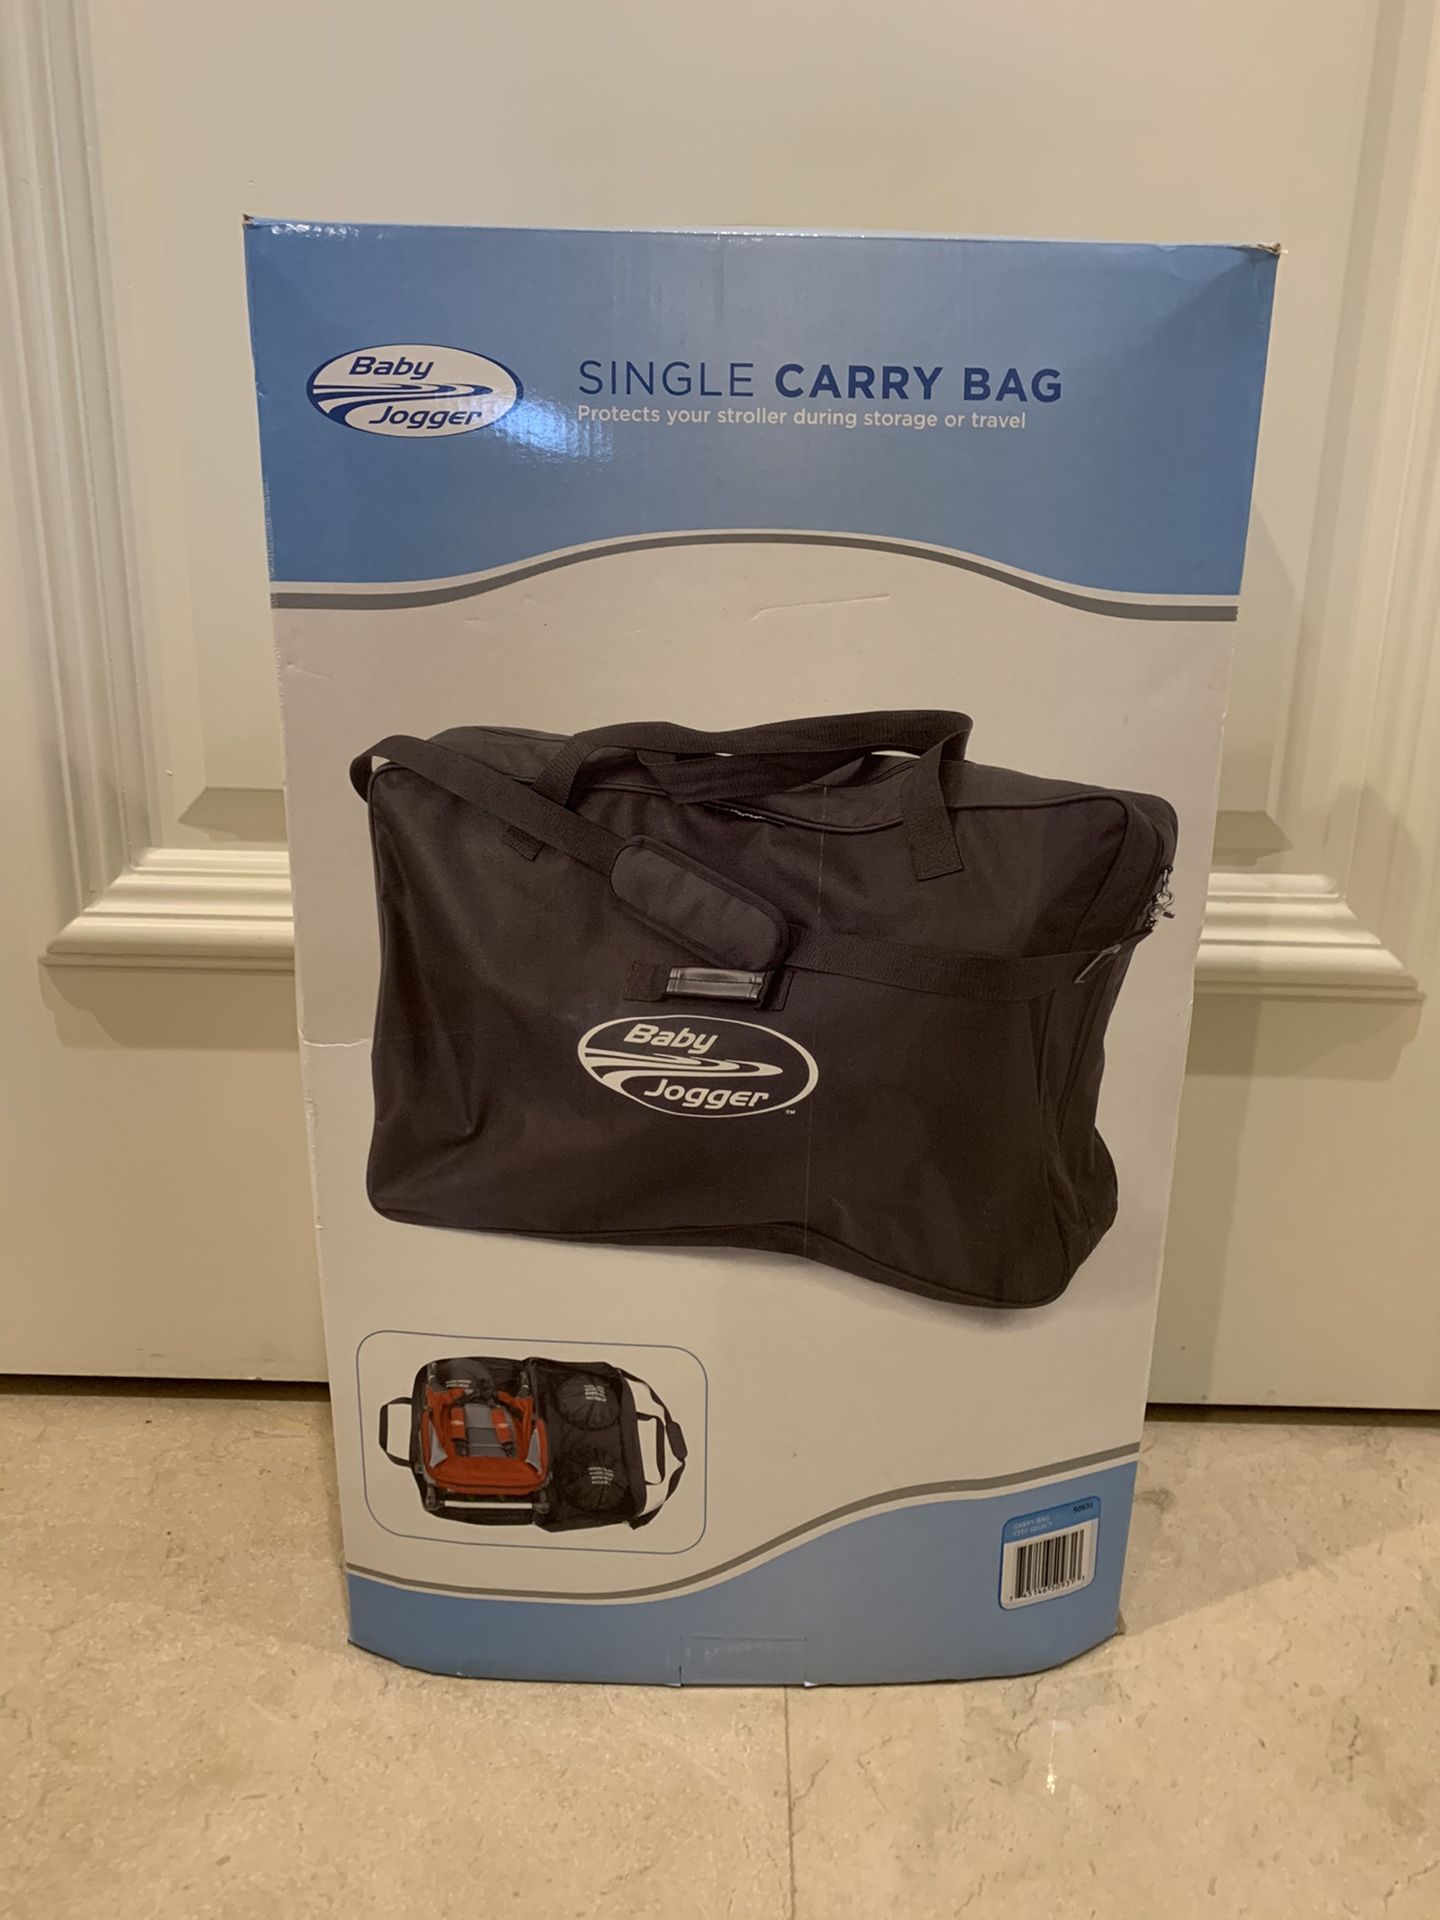 Baby Jogger single city select carry bag